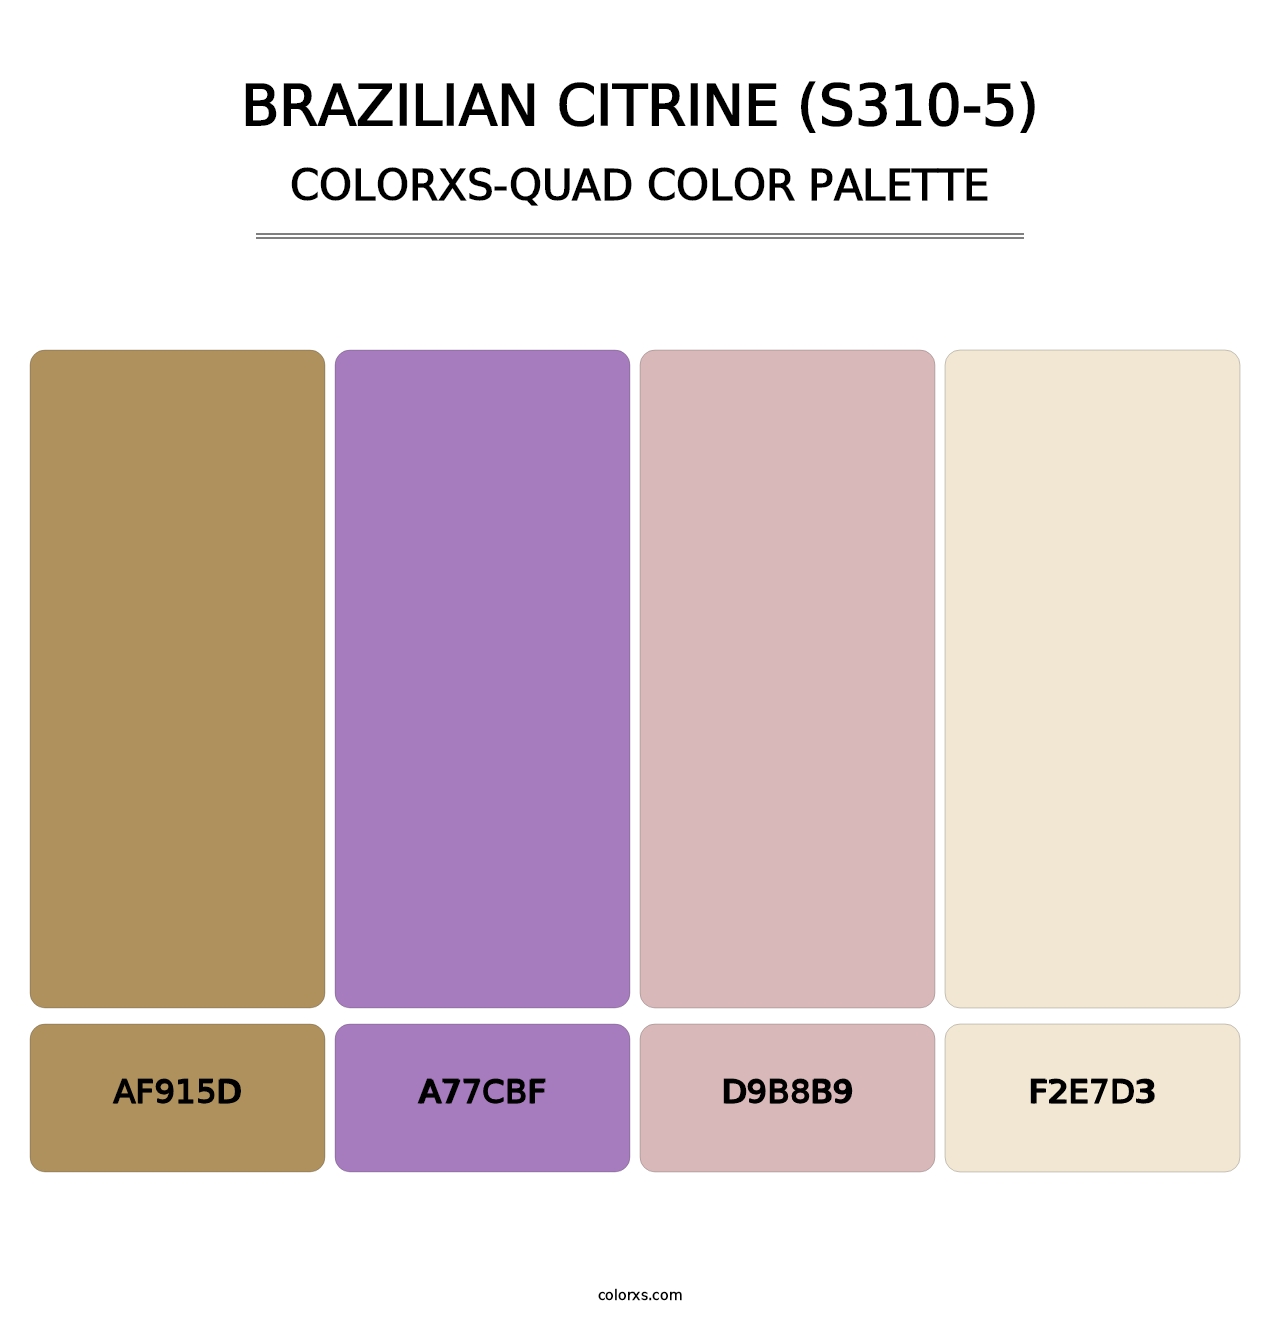 Brazilian Citrine (S310-5) - Colorxs Quad Palette